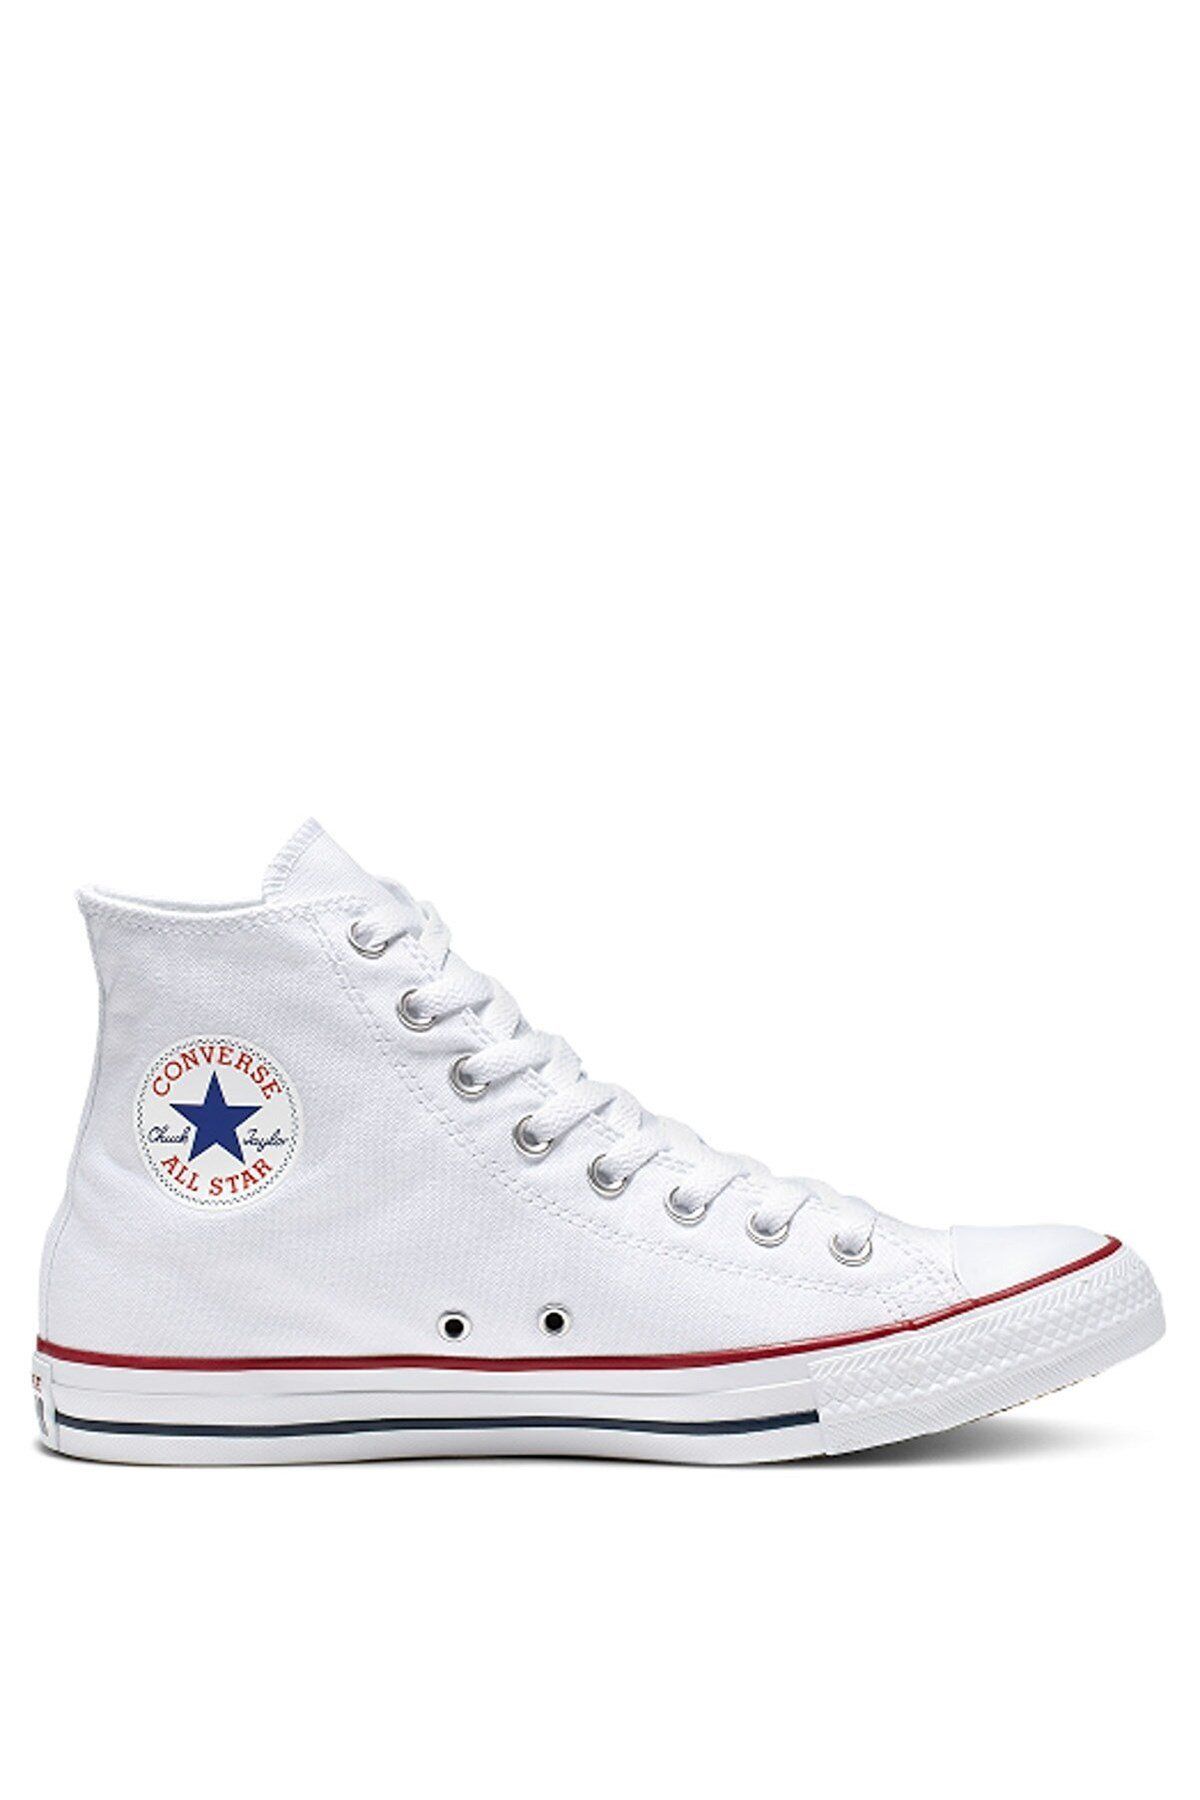 Converse Chuck Taylor All Star Unisex Sneaker